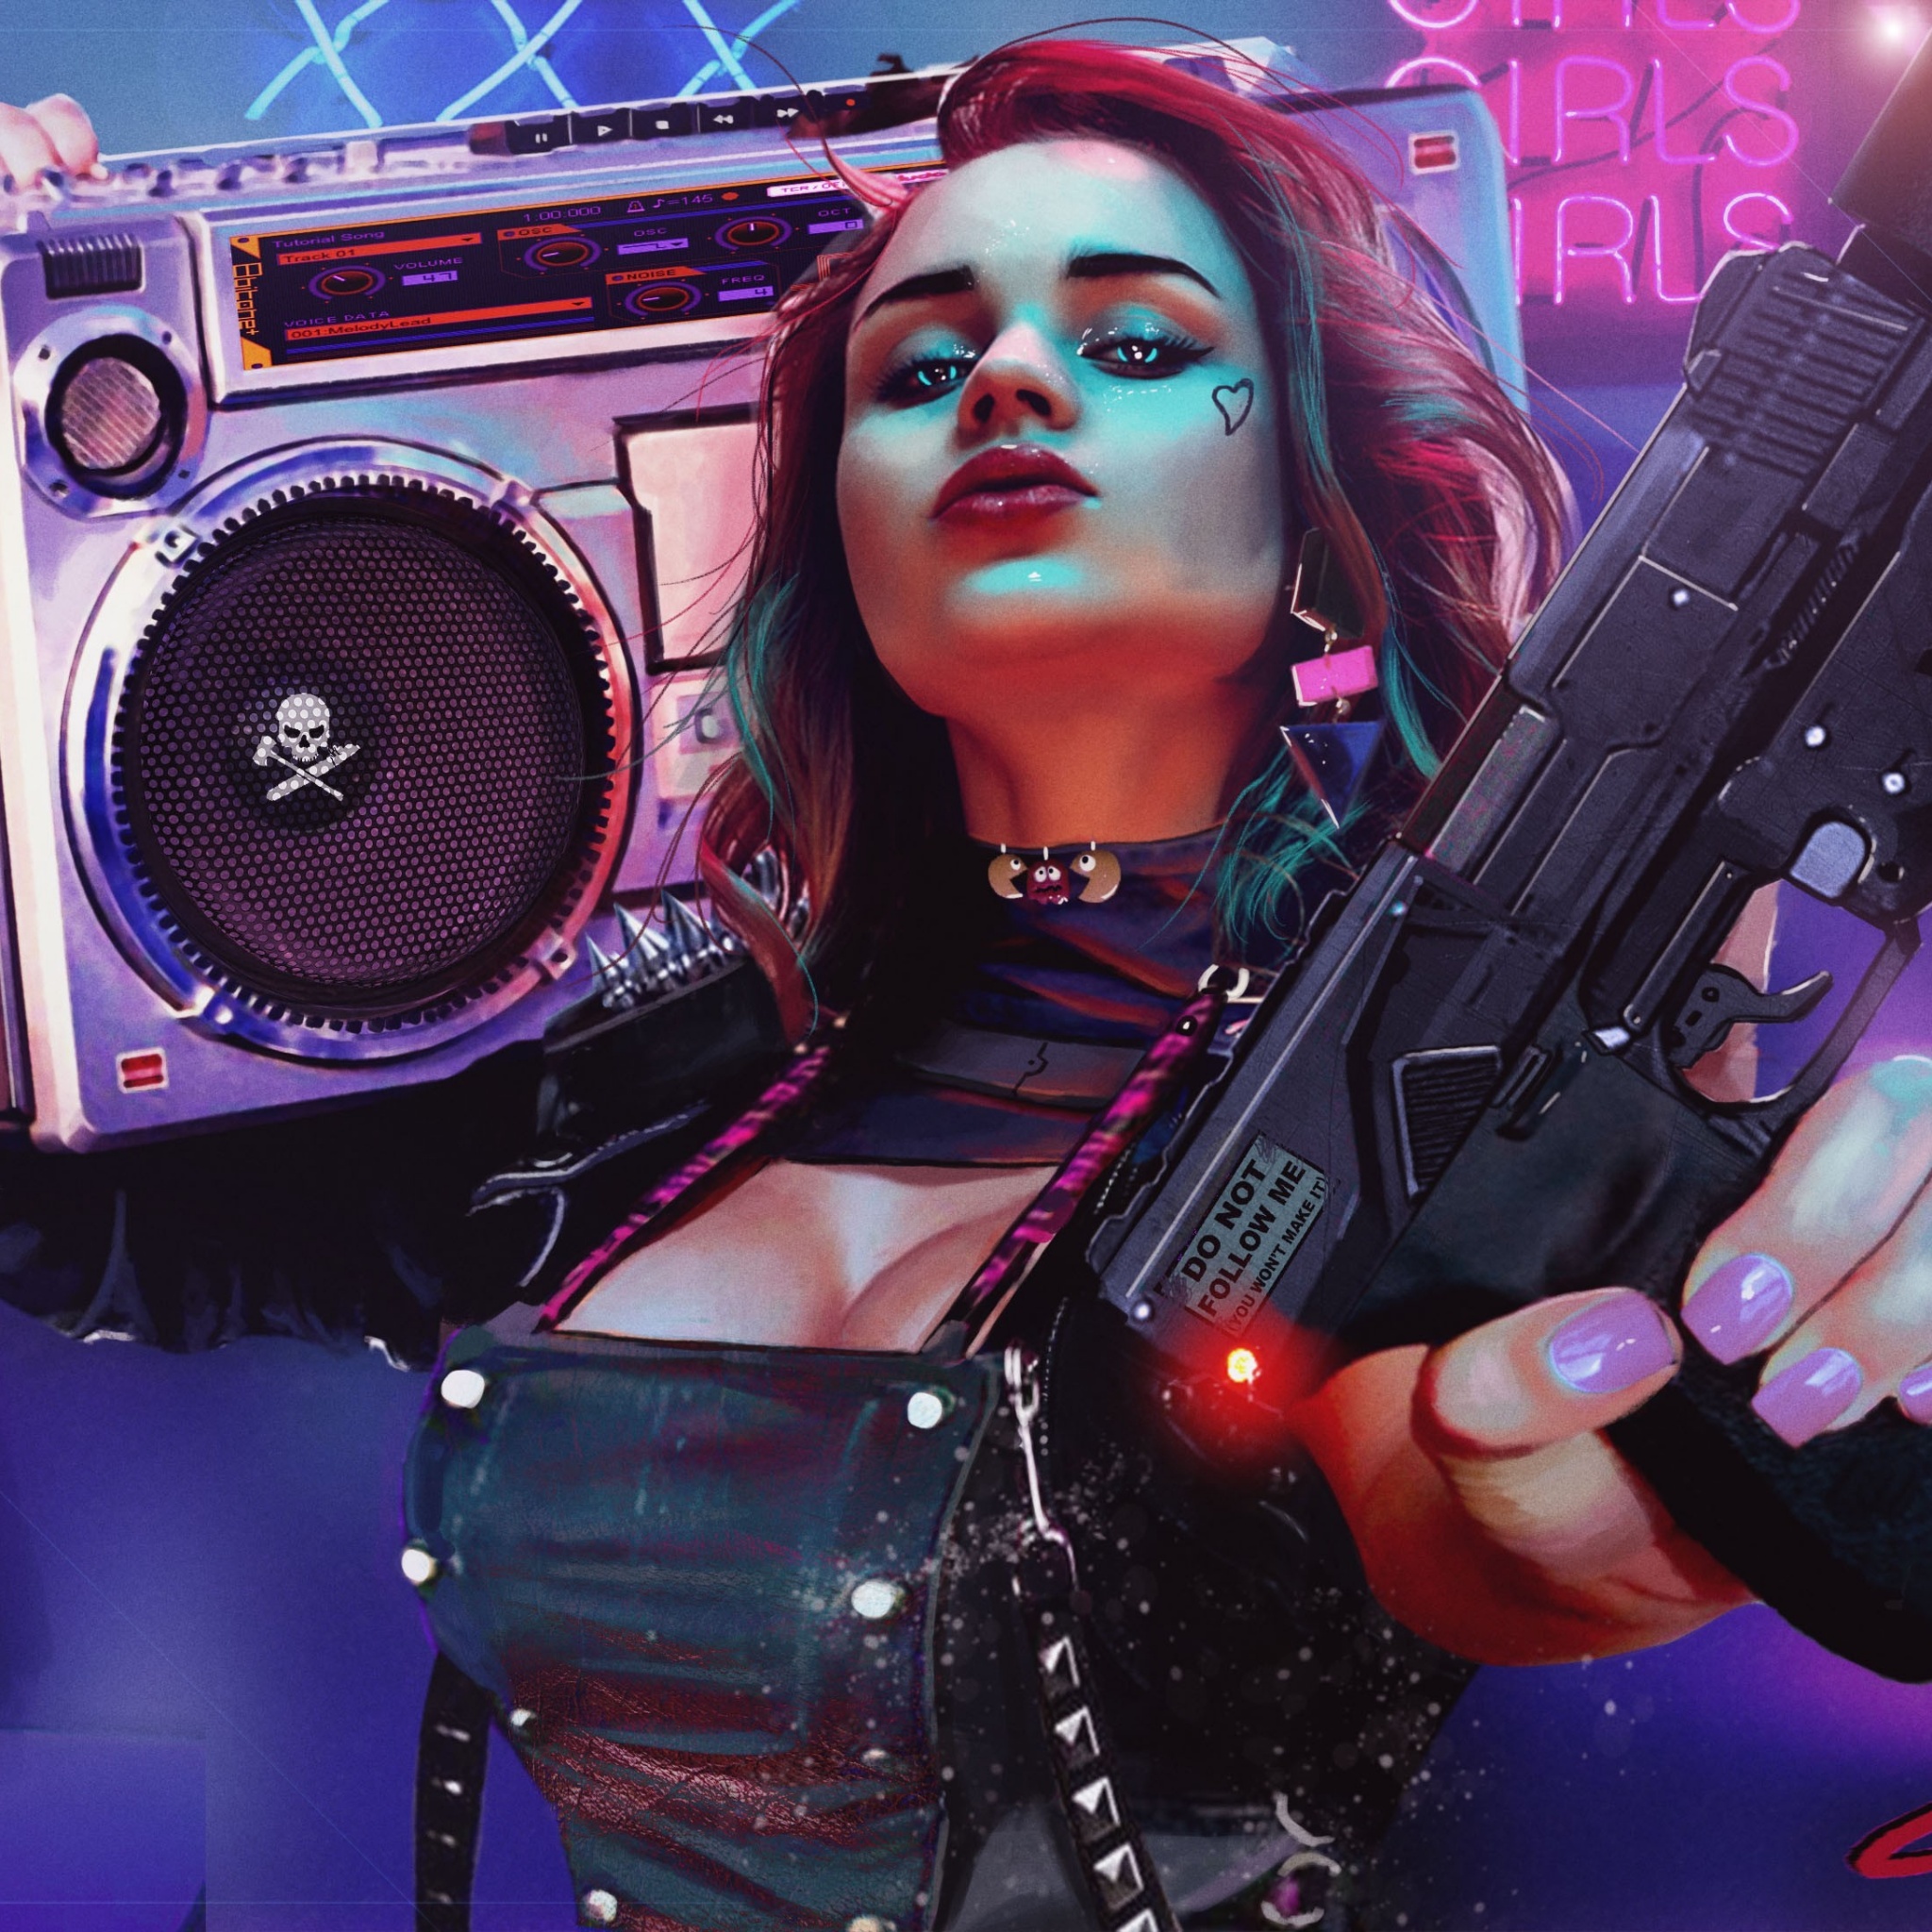 Cyberpunk girl 4K Wallpaper, 2020 Games, Cyberpunk 2077, Neon, Artwork